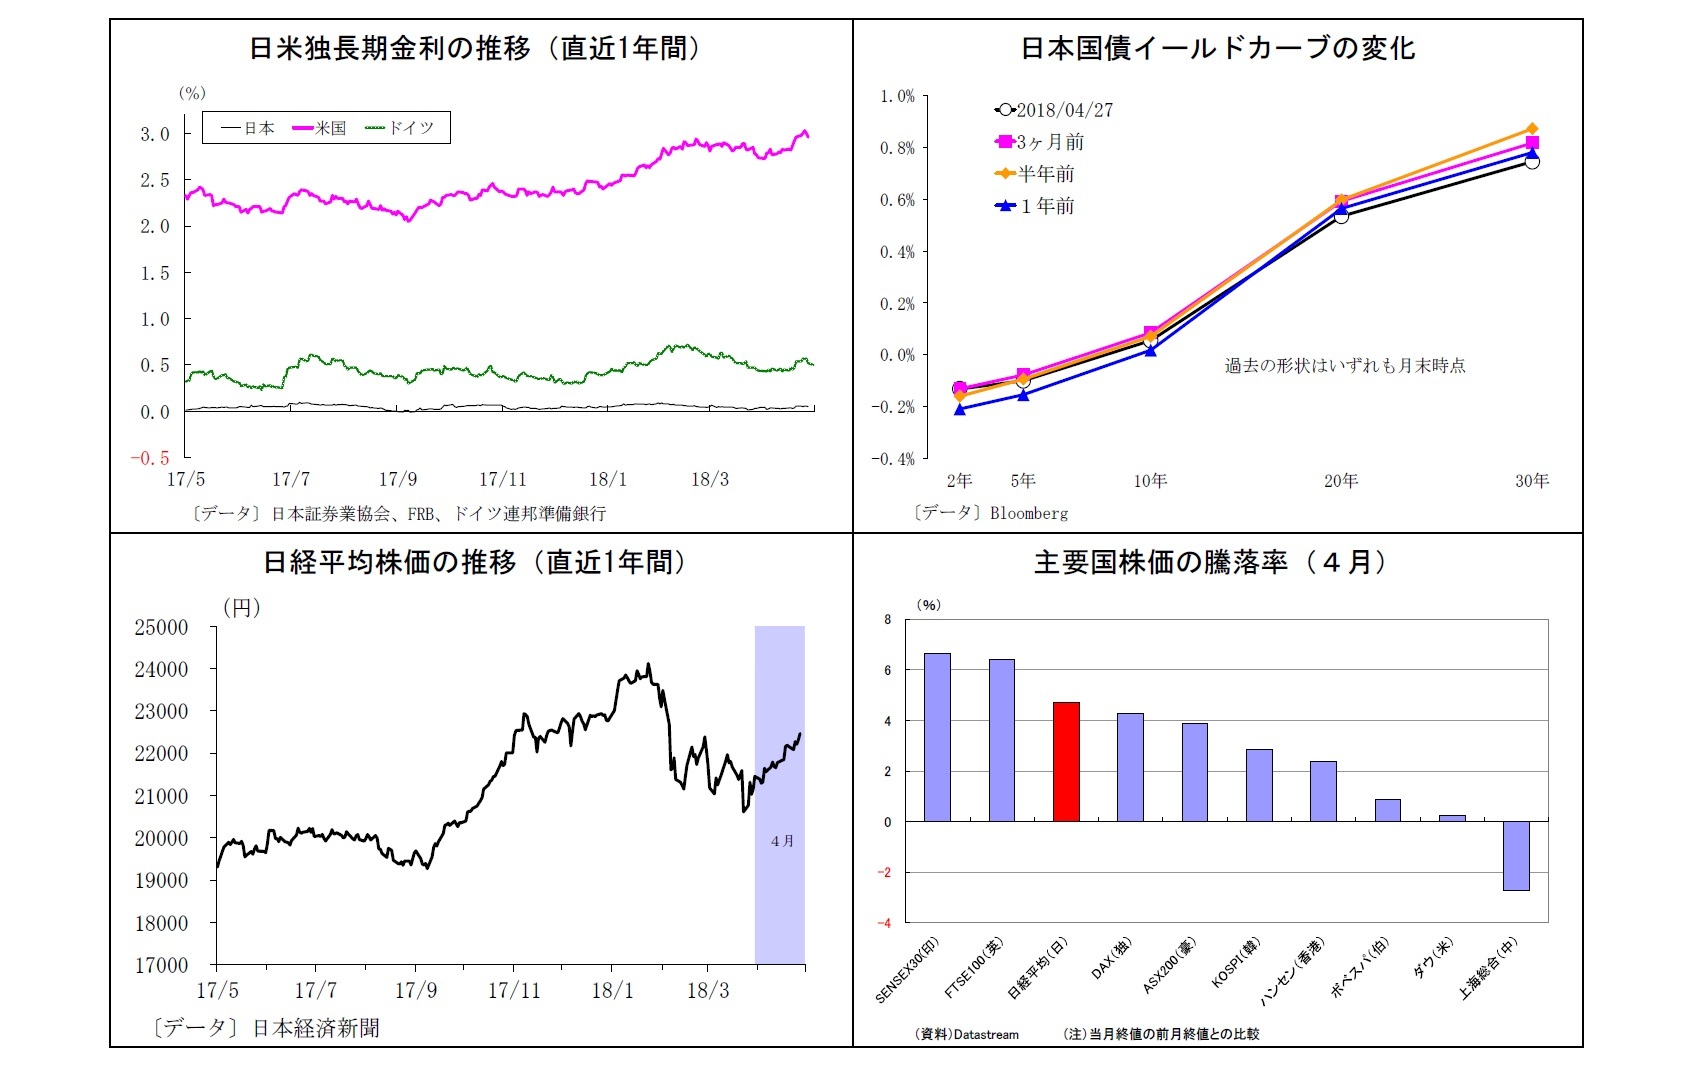 日米独長期金利の推移（直近1年間）/日本国債イールドカーブの変化/日経平均株価の推移（直近1年間）/主要国株価の騰落率（４月）